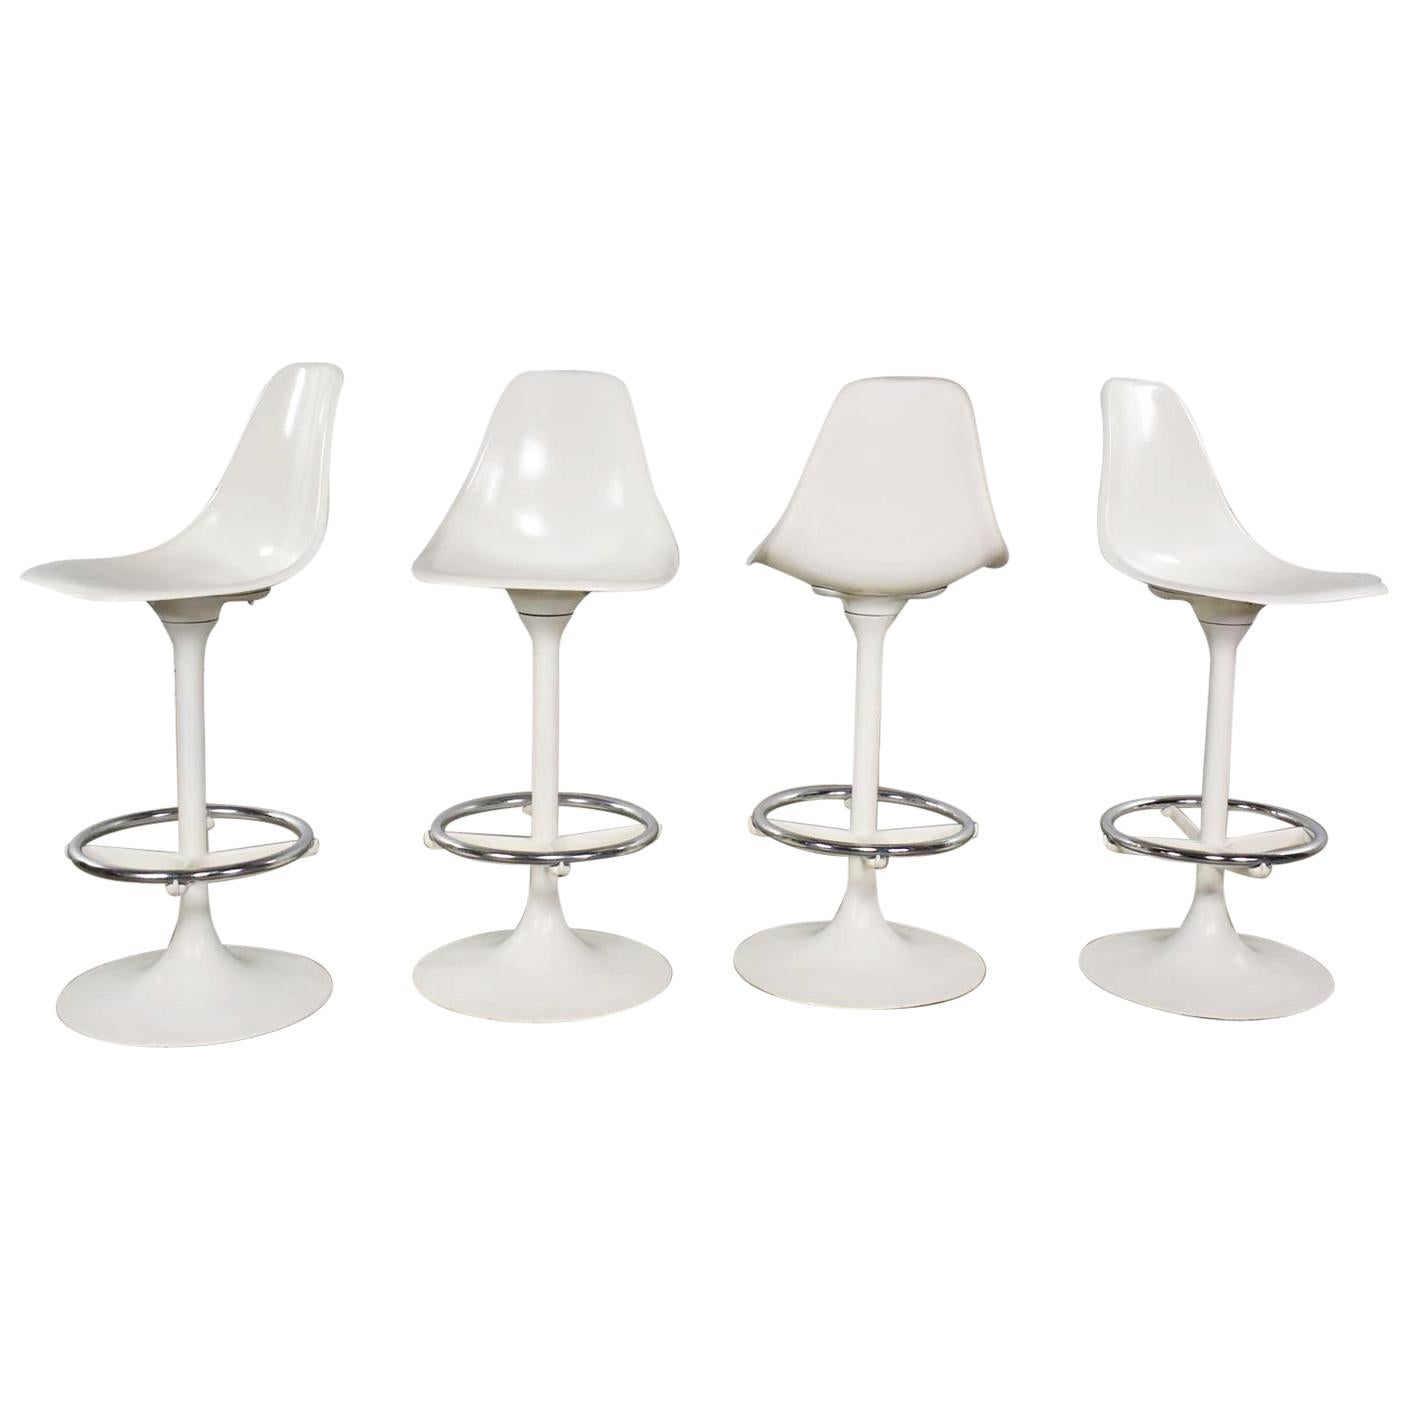 4 Tulip Style White Swivel Barstools by Arthur Umanoff for Contemporary Shells